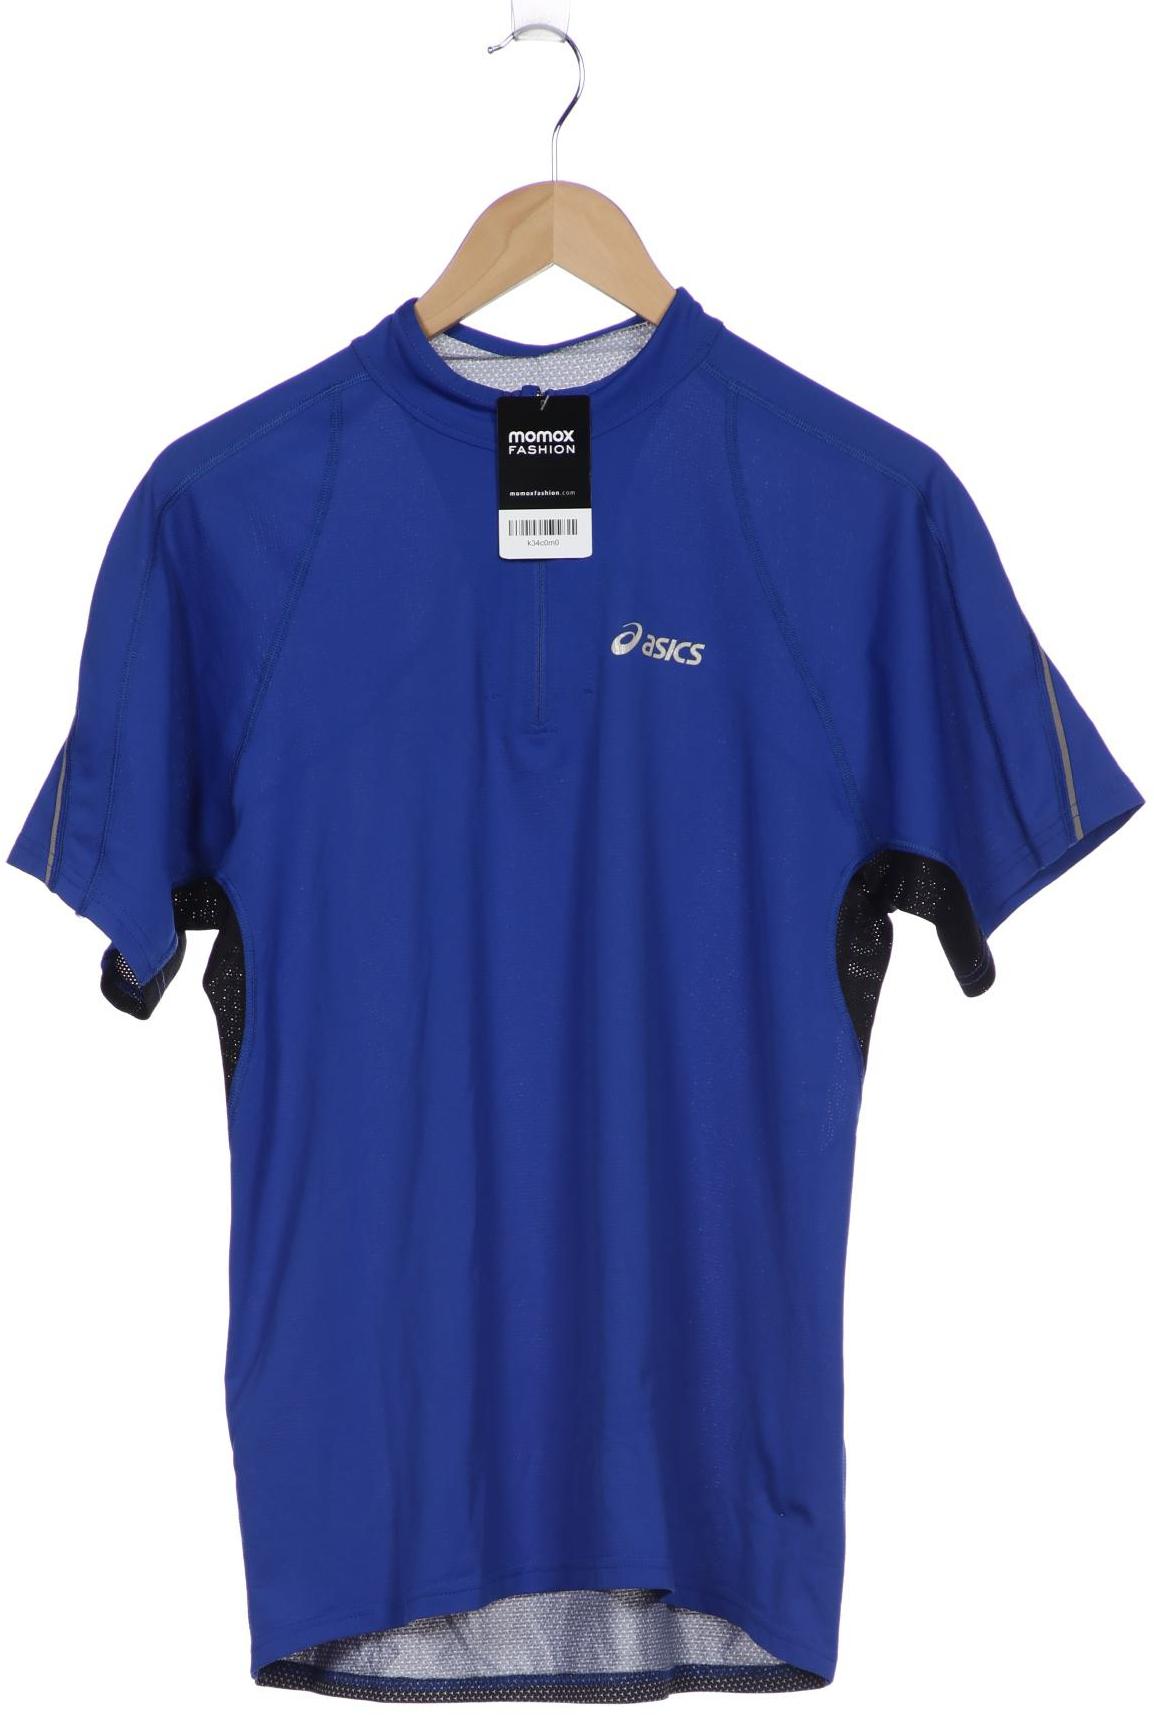 Asics Herren T-Shirt, blau von ASICS